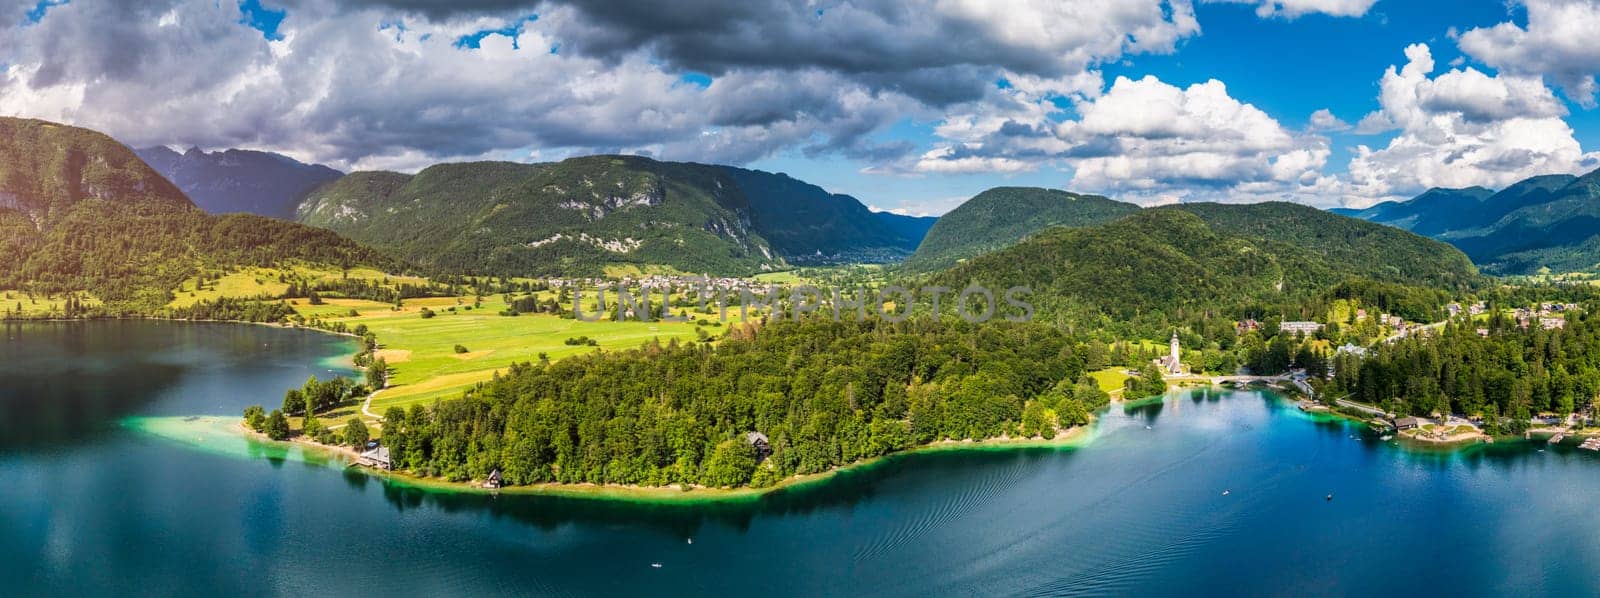 Aerial view of Bohinj lake in Julian Alps. Popular touristic destination in Slovenia. Bohinj Lake, Church of St John the Baptist. Triglav National Park, Julian Alps, Slovenia. 